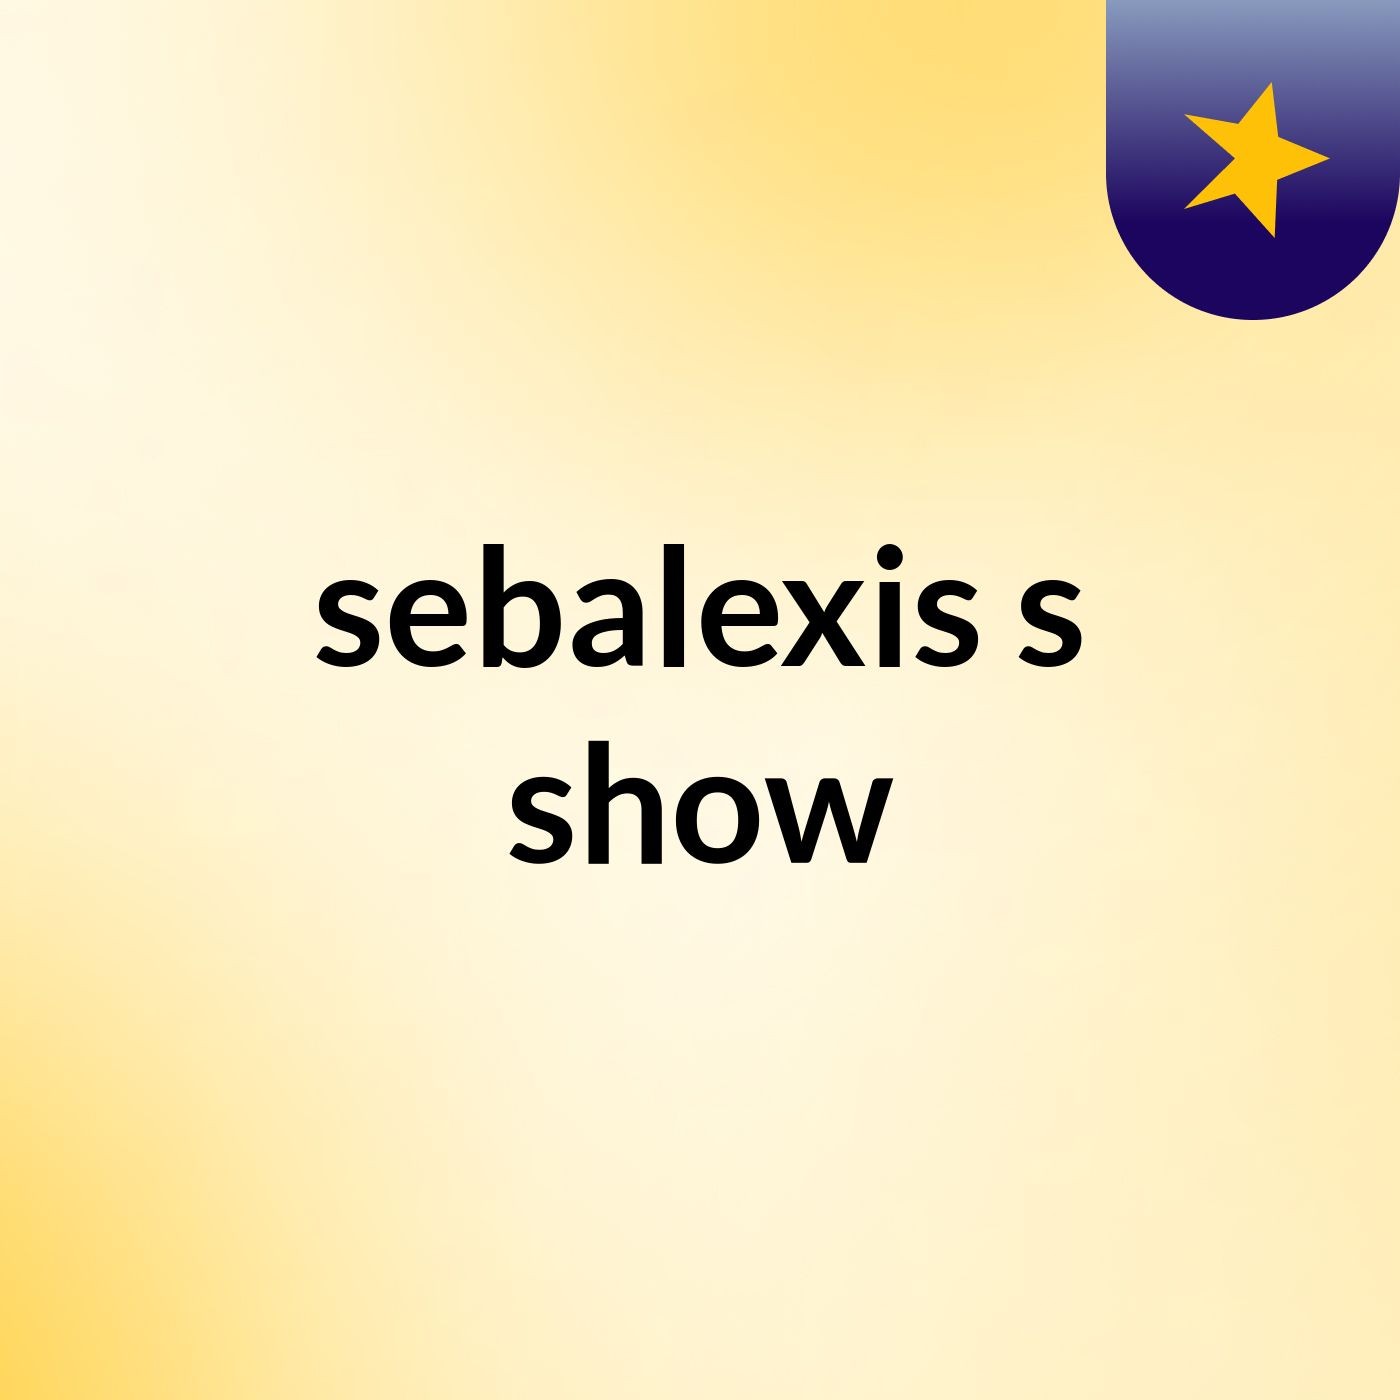 sebalexis's show